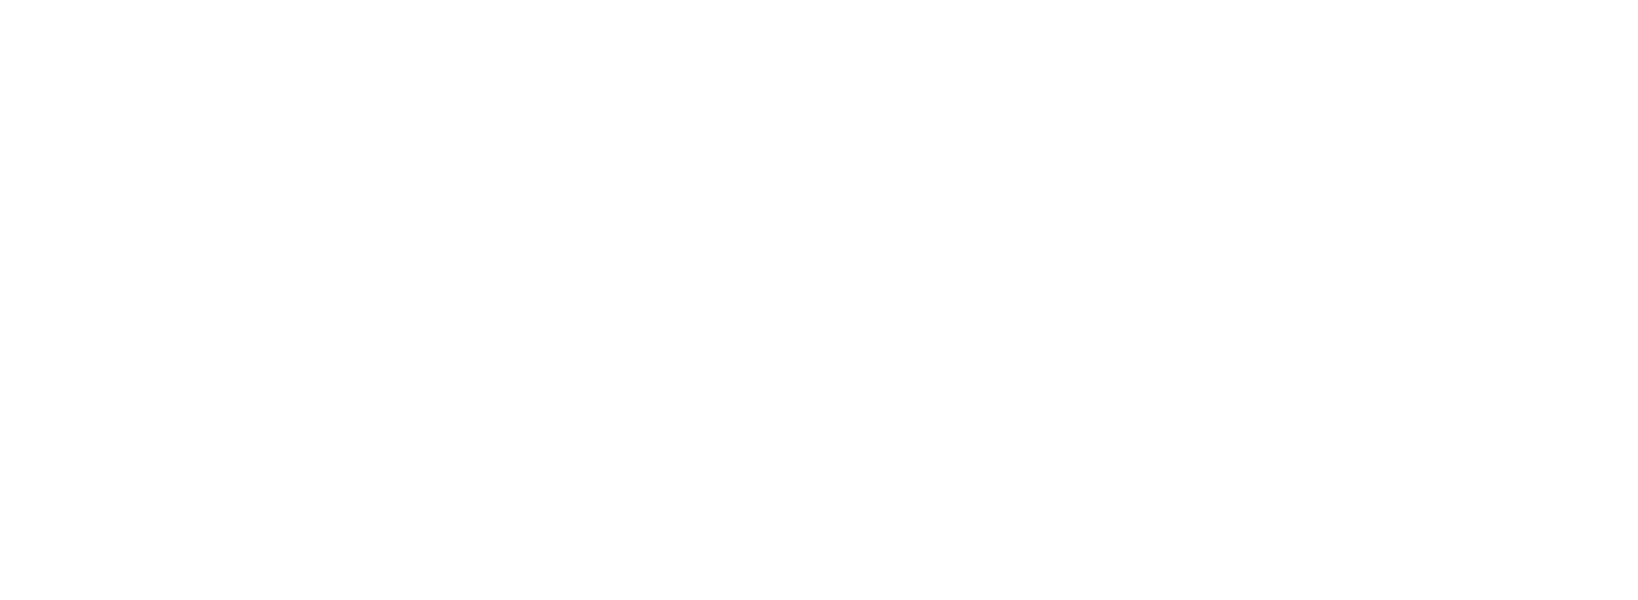 Share the Burden Crossfit